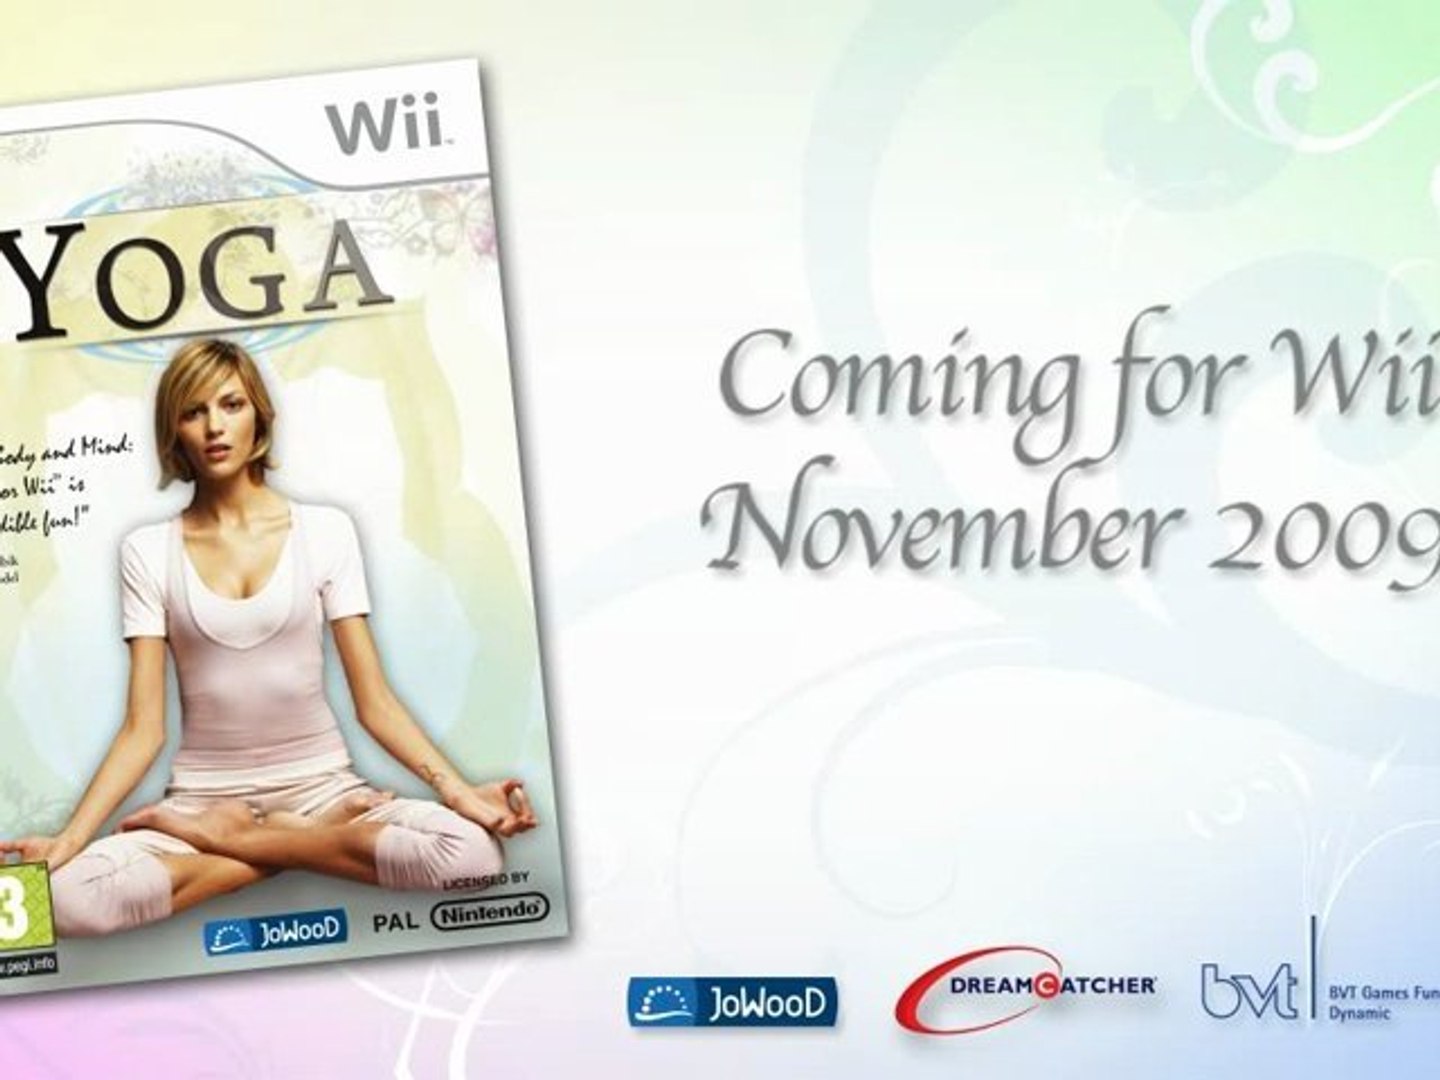 Yoga sur Wii Trailer - Vidéo Dailymotion